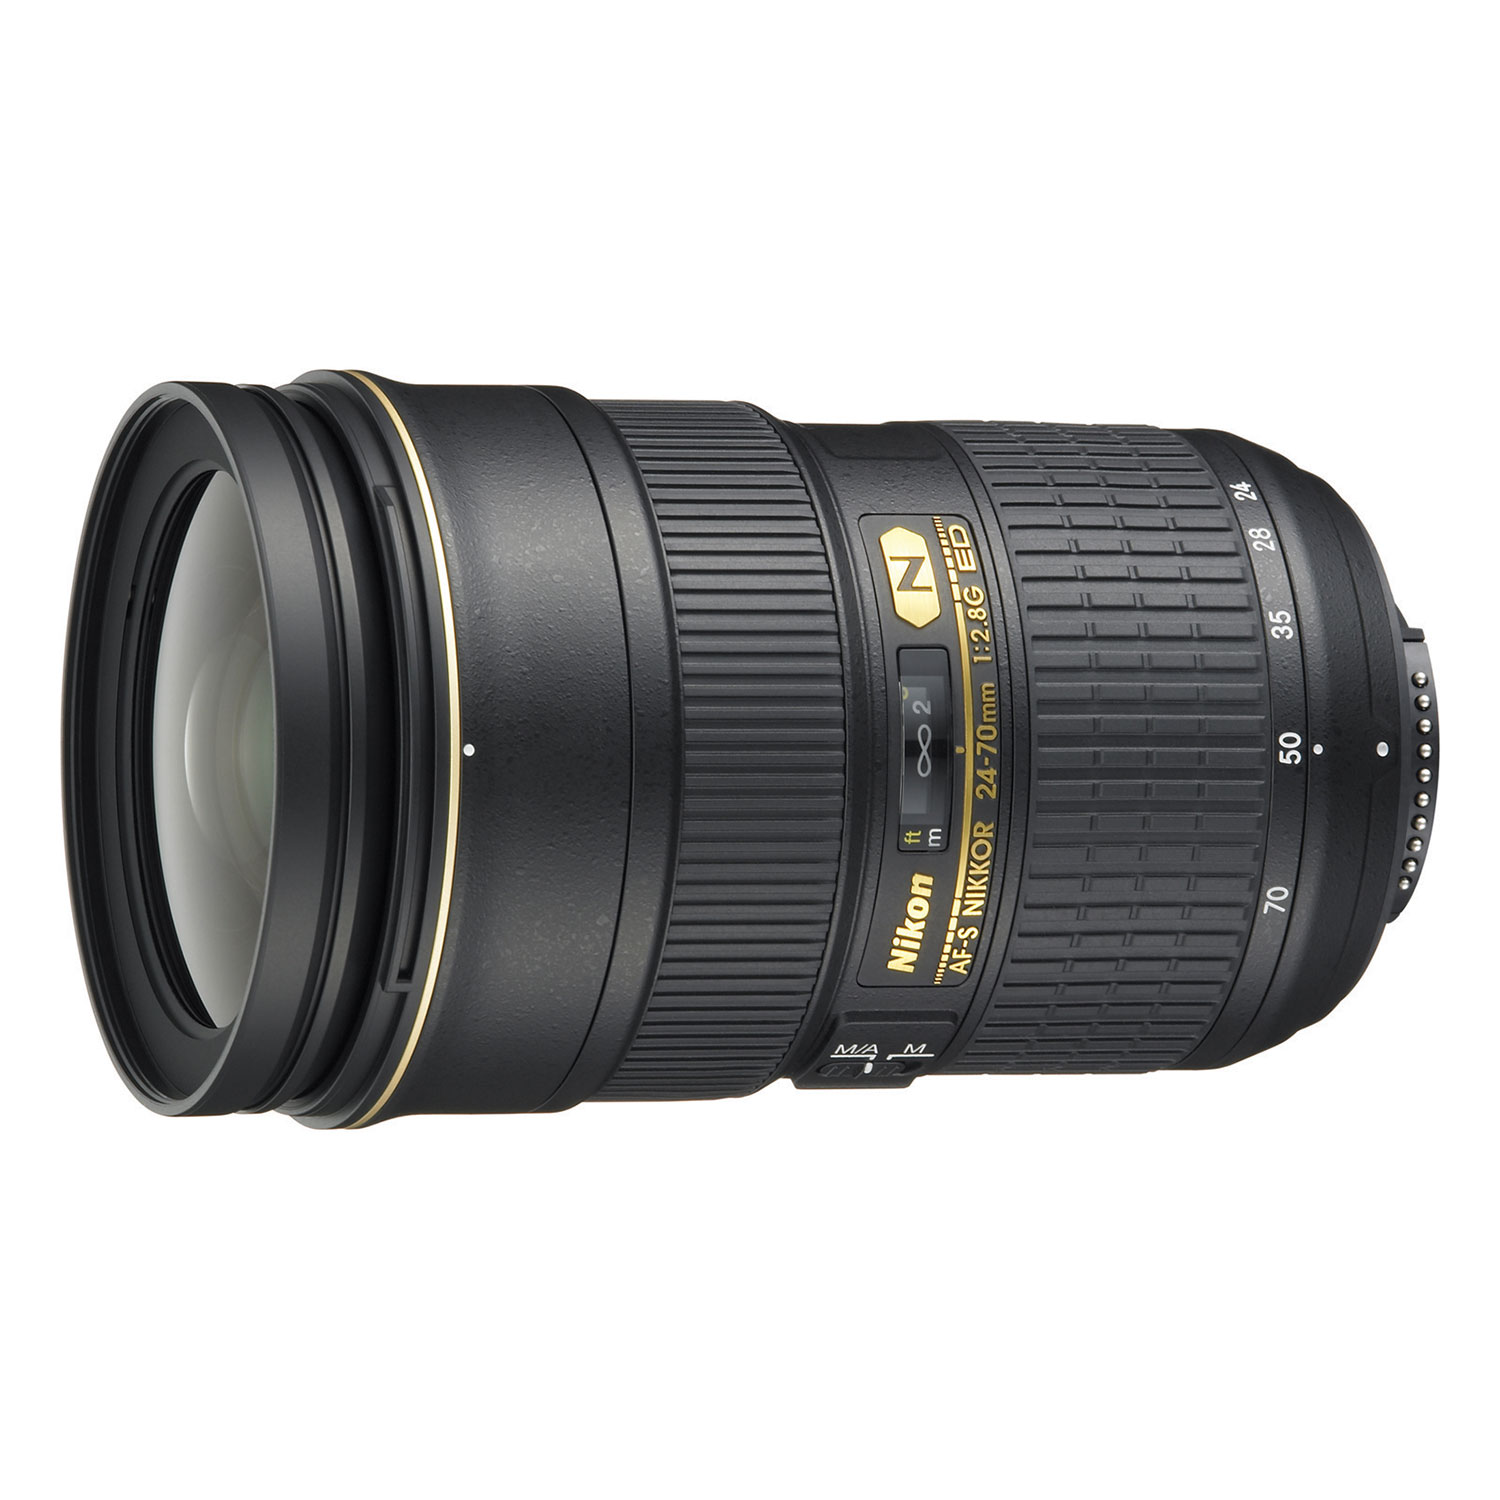 Nikon AFS 24-70 F2.8 Widezoom Lens